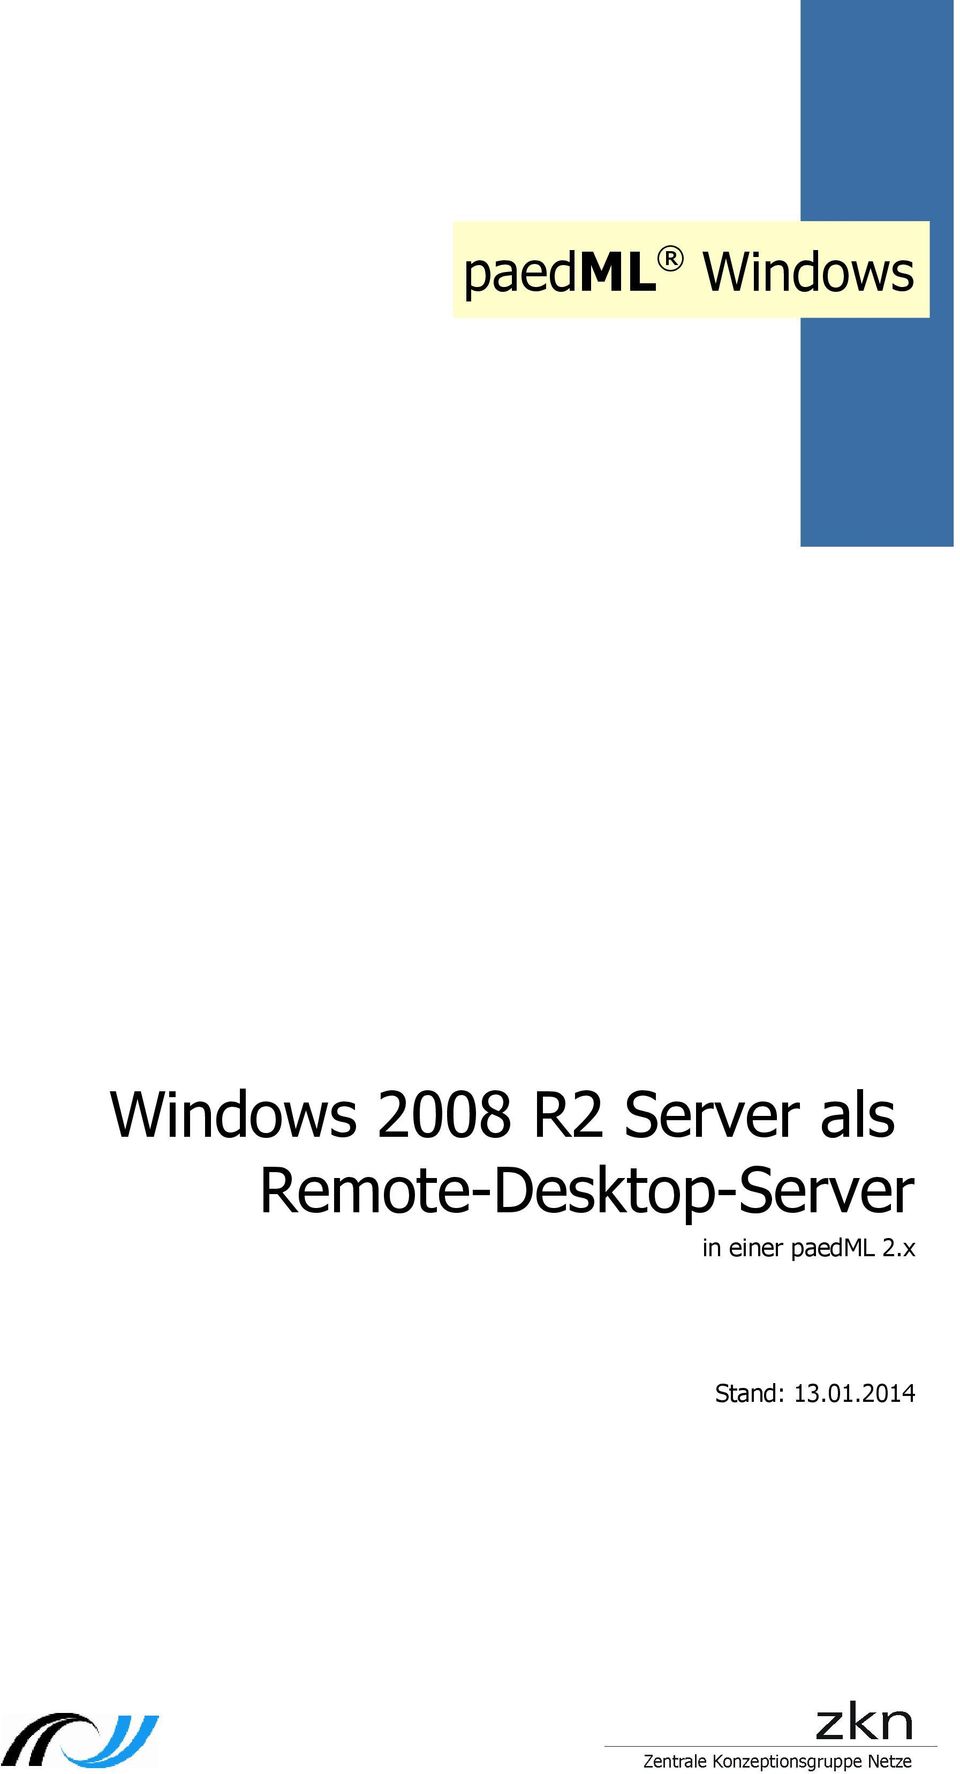 Remote-Desktop-Server in